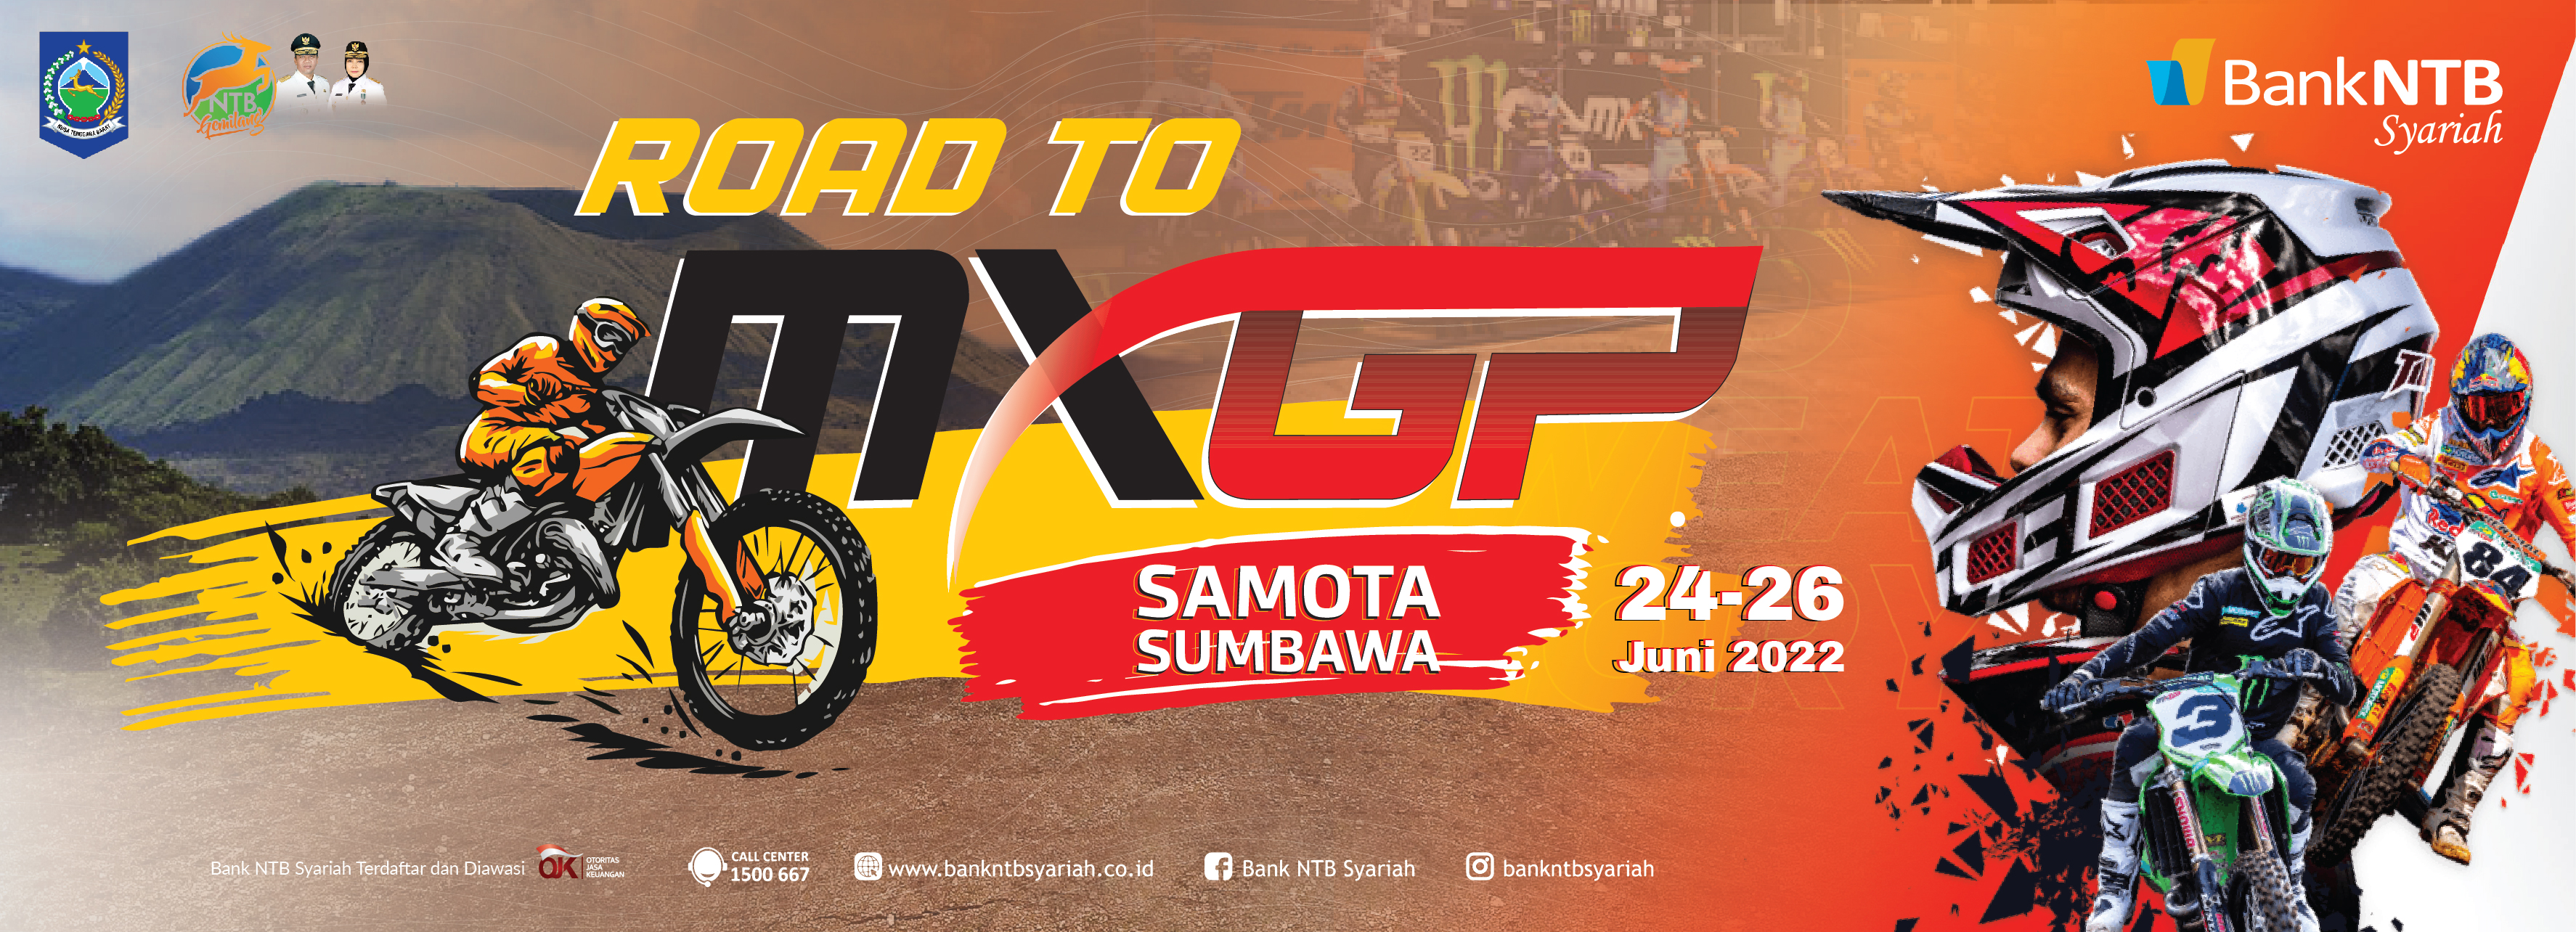 Road-to-Motocross-Grand-Prix-2022-Samota-Sumbawa.html